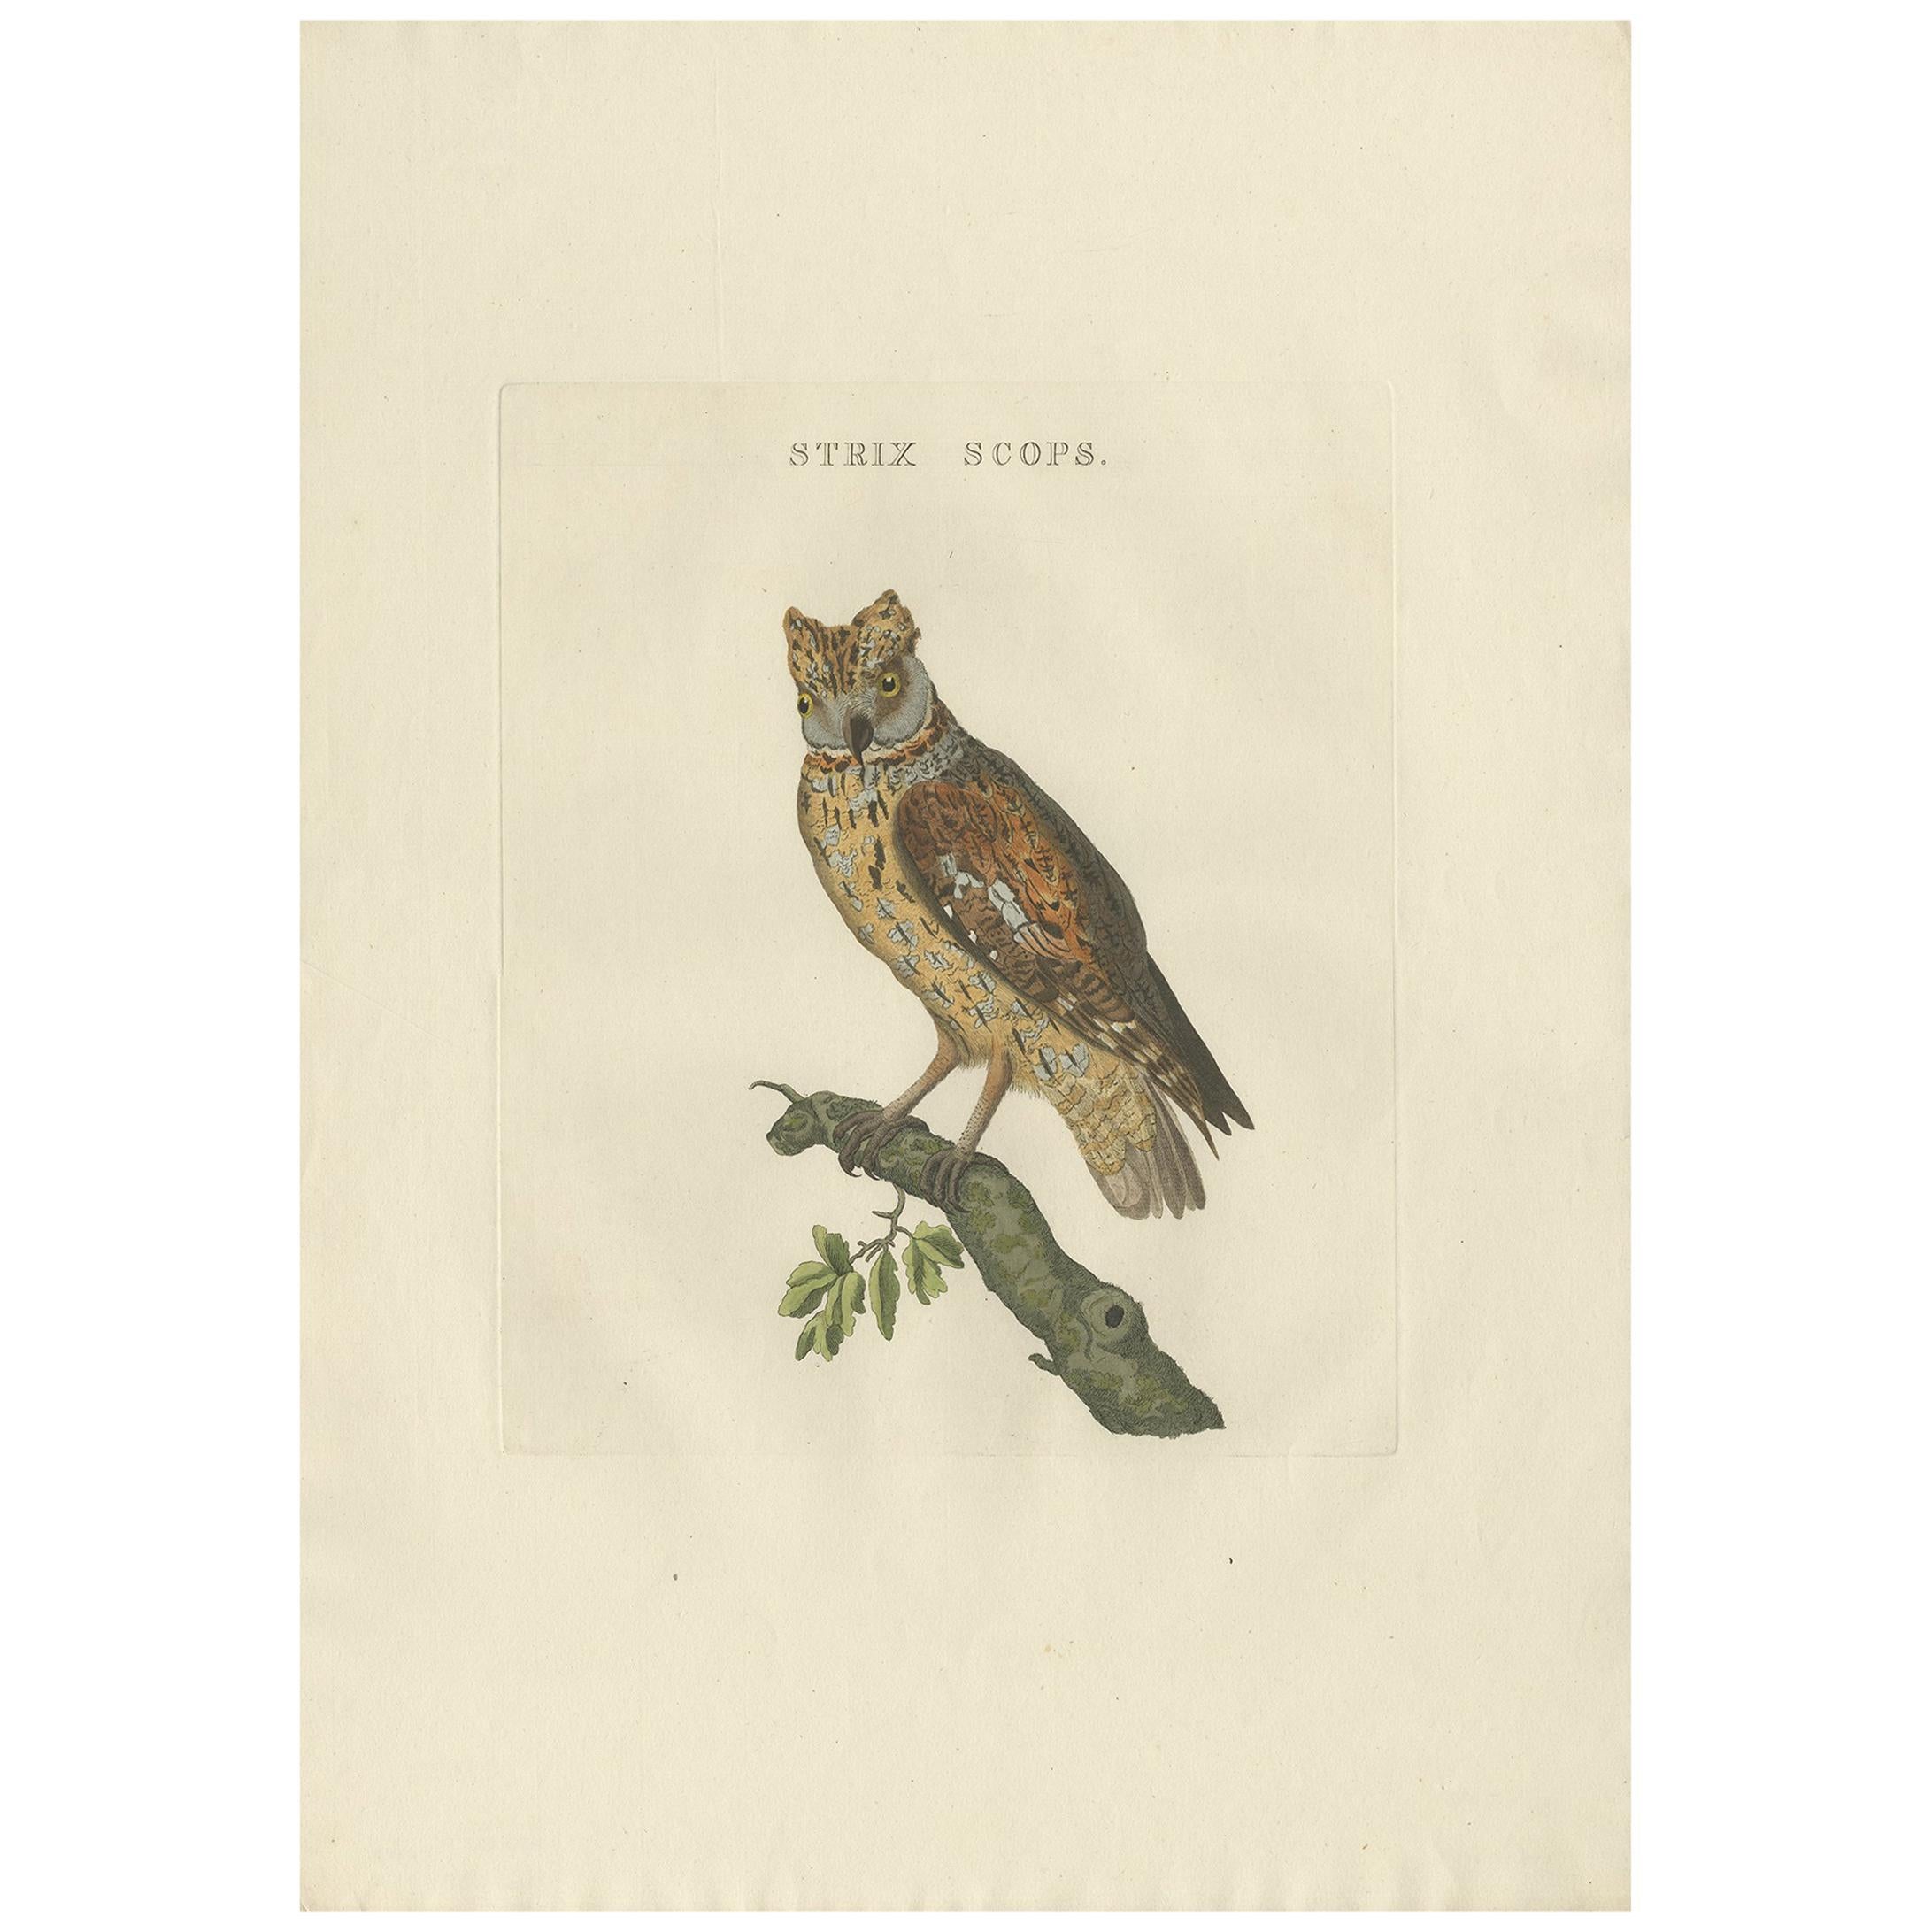 Antique Bird Print of a Eurasion Scops Owl by Sepp & Nozeman, 1809 For Sale